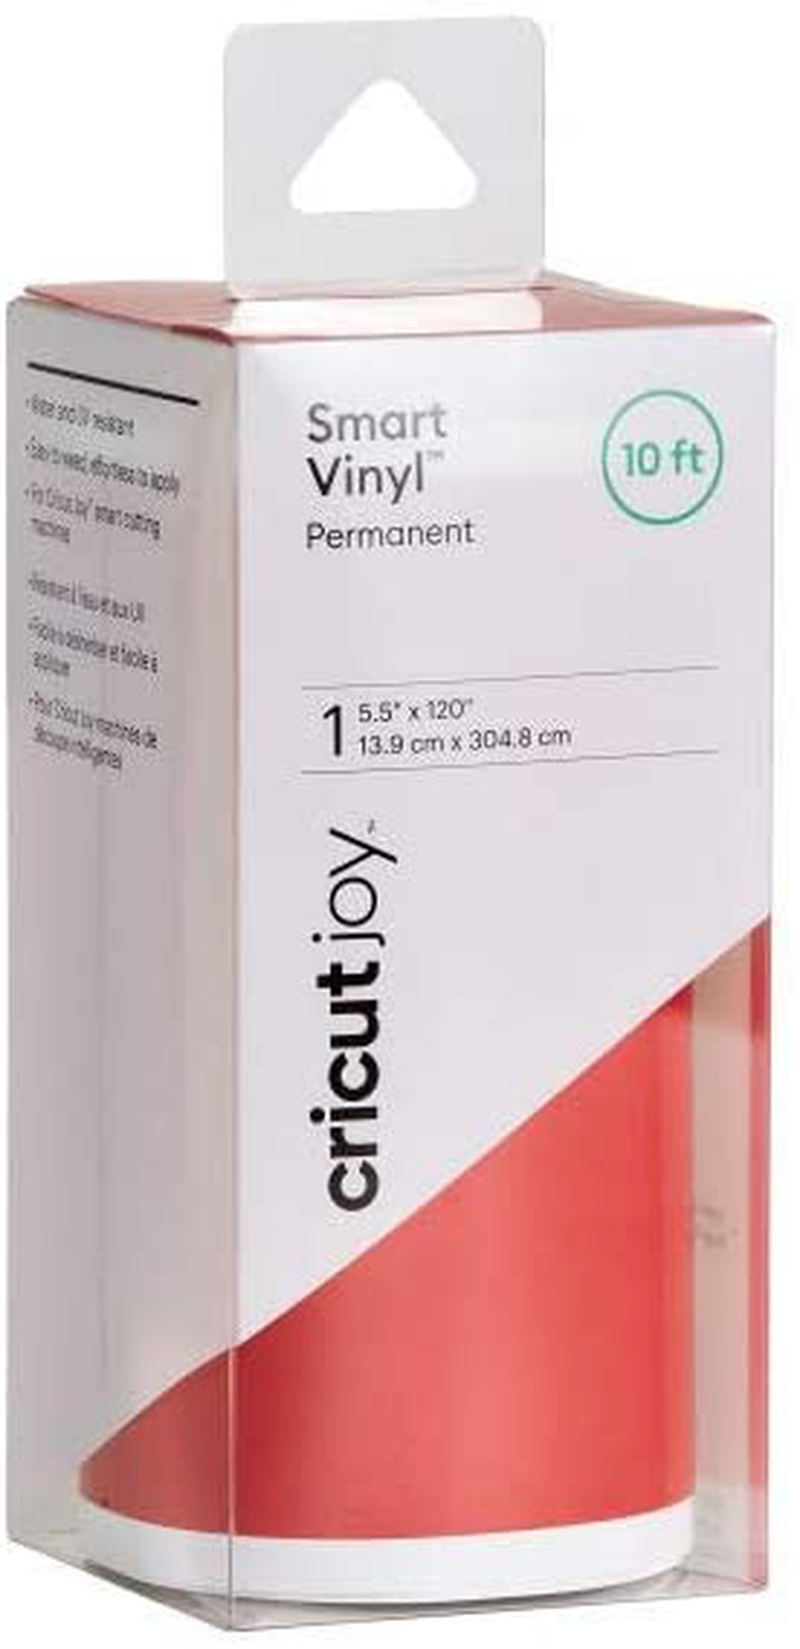 Cricut Joy Smart Vinyl - Permanent - Adhesive Decal Roll